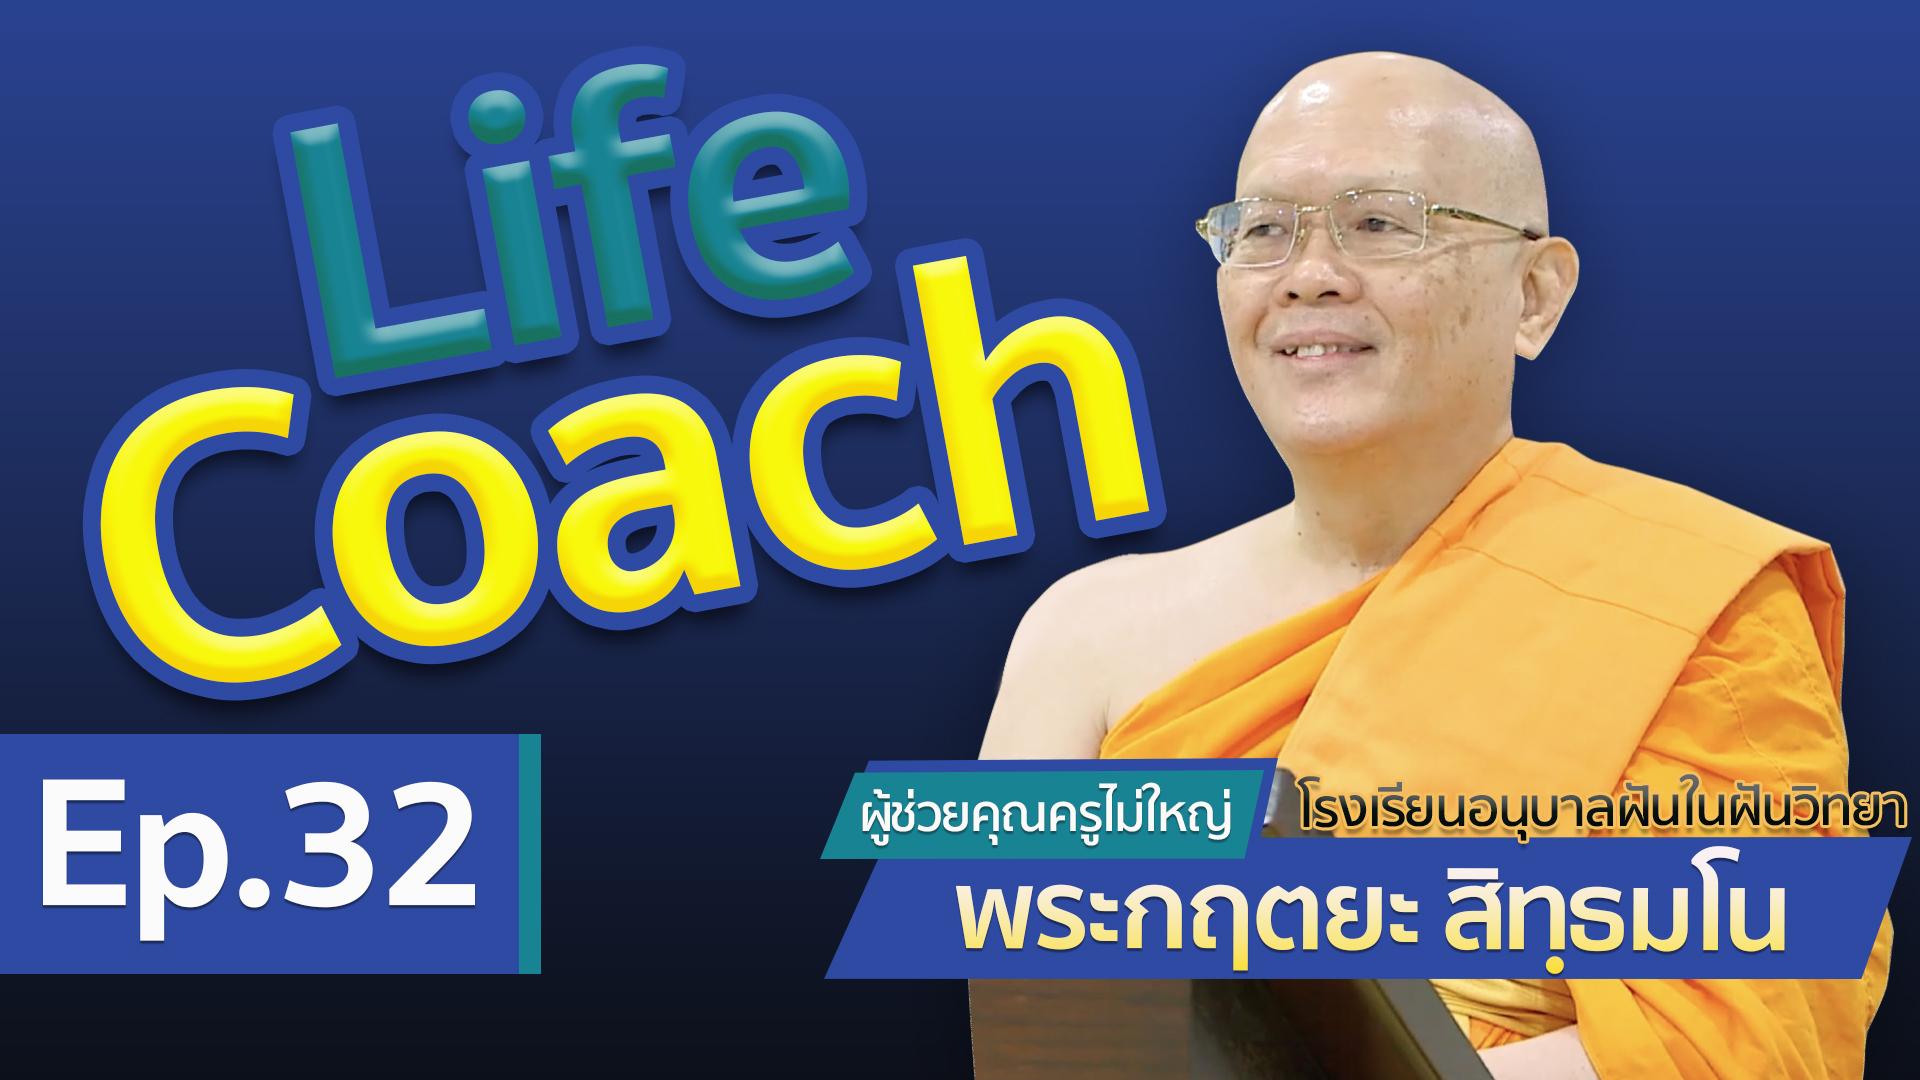 Life Coach Ep.32 ไลฟ์โค้ช | โดย พระกฤตยะ สิทฺธมโน | 15 พ.ค. 2566